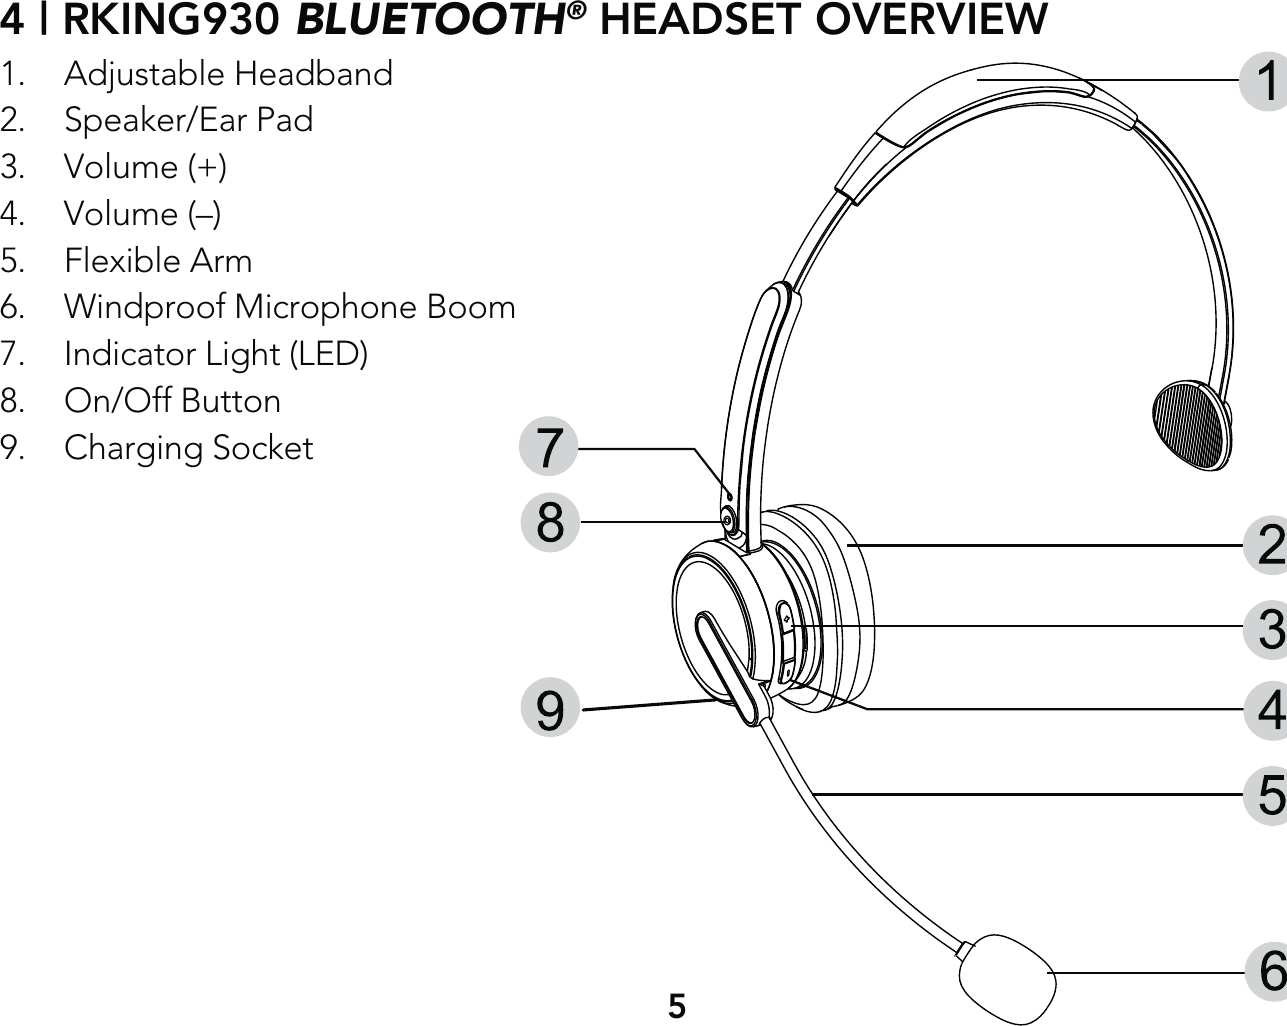 4 | RKING930 BLUETOOTH® HEADSET OVERVIEW1. Adjustable Headband 2. Speaker/Ear Pad 3. Volume (+) 4. Volume (–) 5. Flexible Arm 6. Windproof Microphone Boom 7. Indicator Light (LED) 8. On/Off Button 9. Charging Socket5